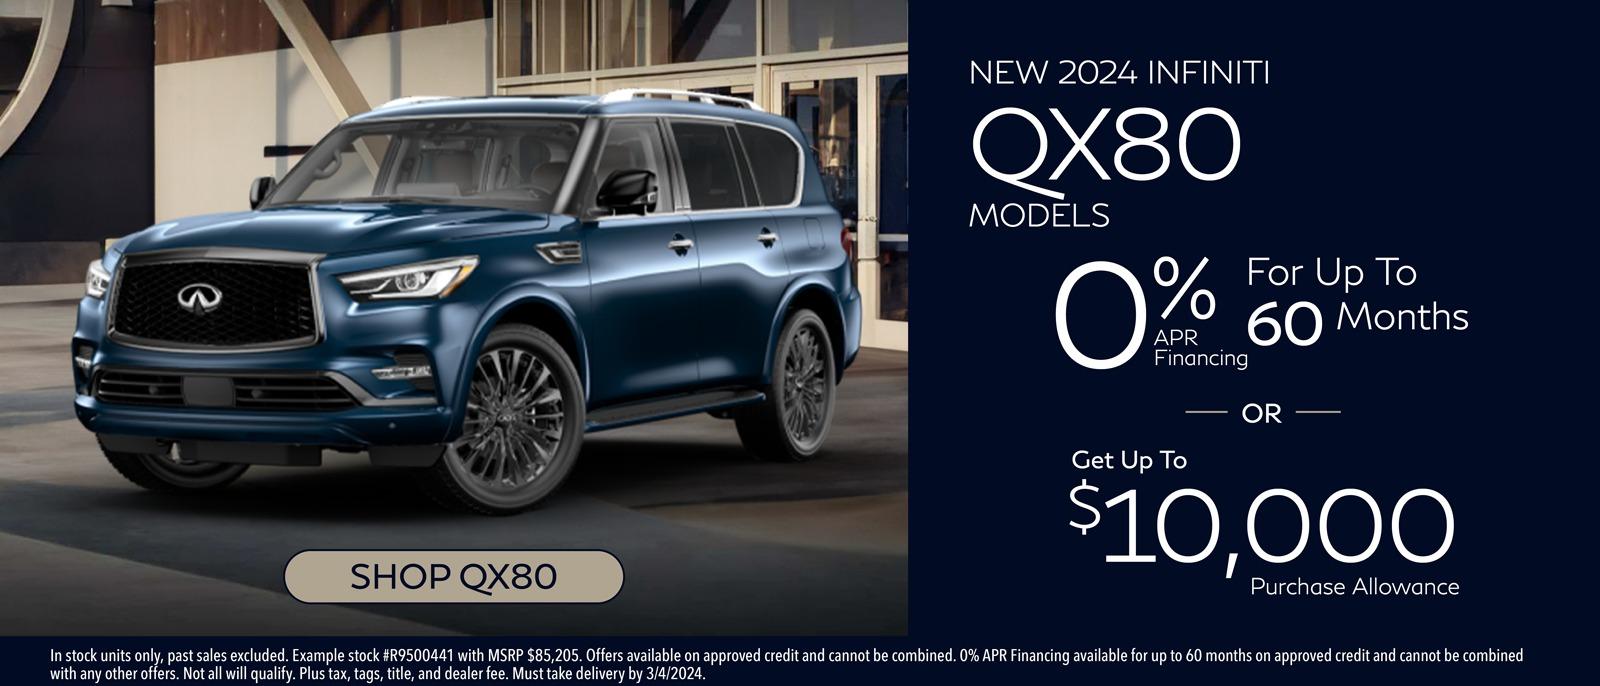 New 2024 INFINITI QX80 Models